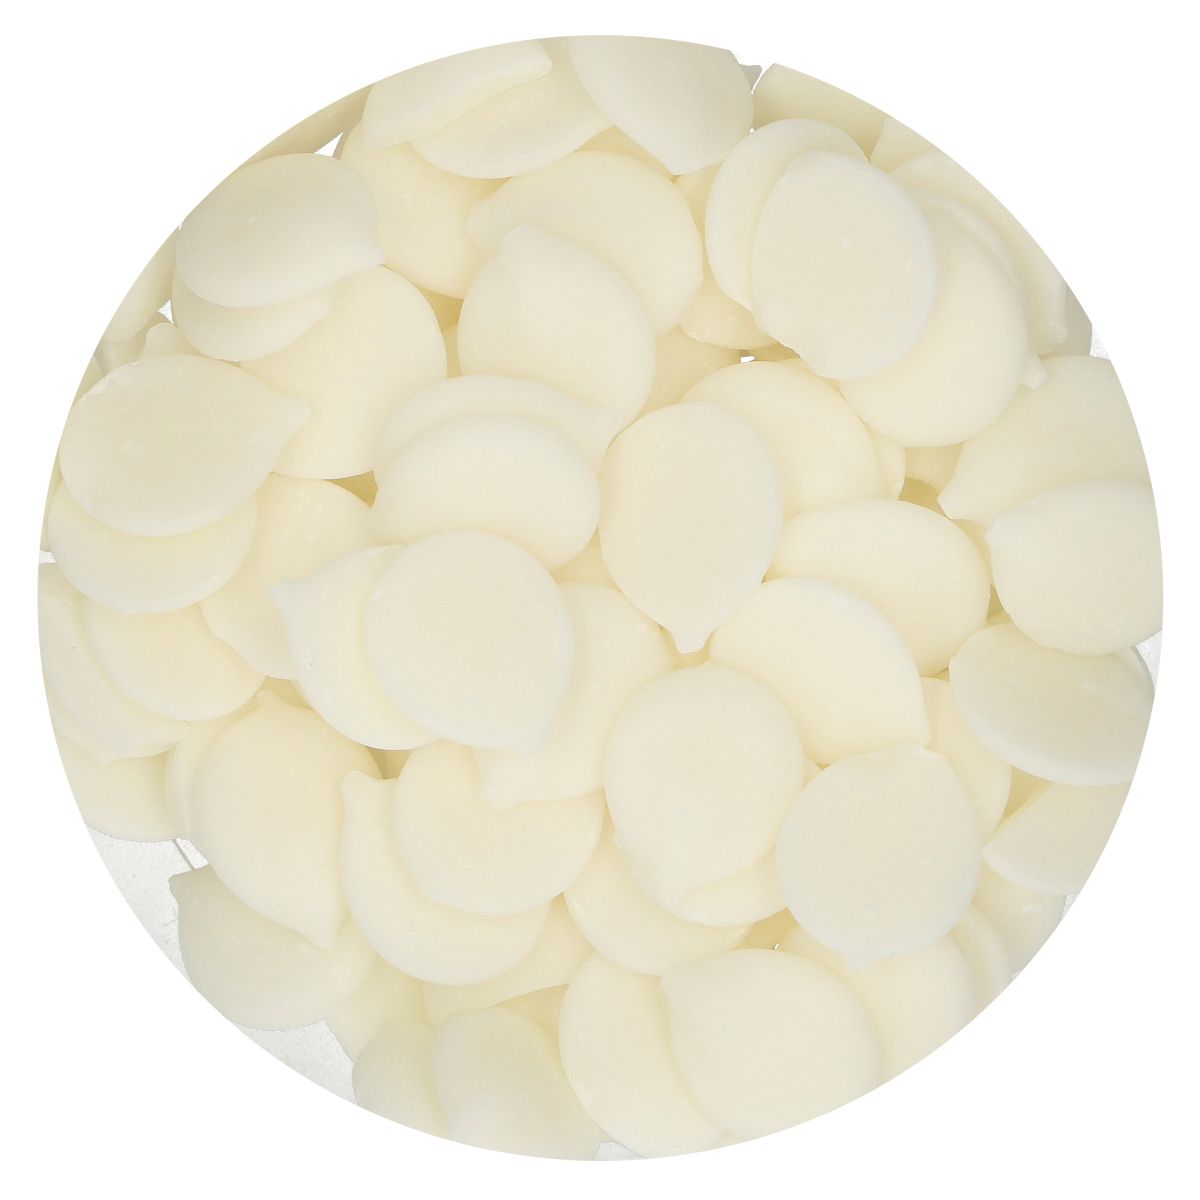 Imagen de producto: Deco Melts blanco natural - 250 g